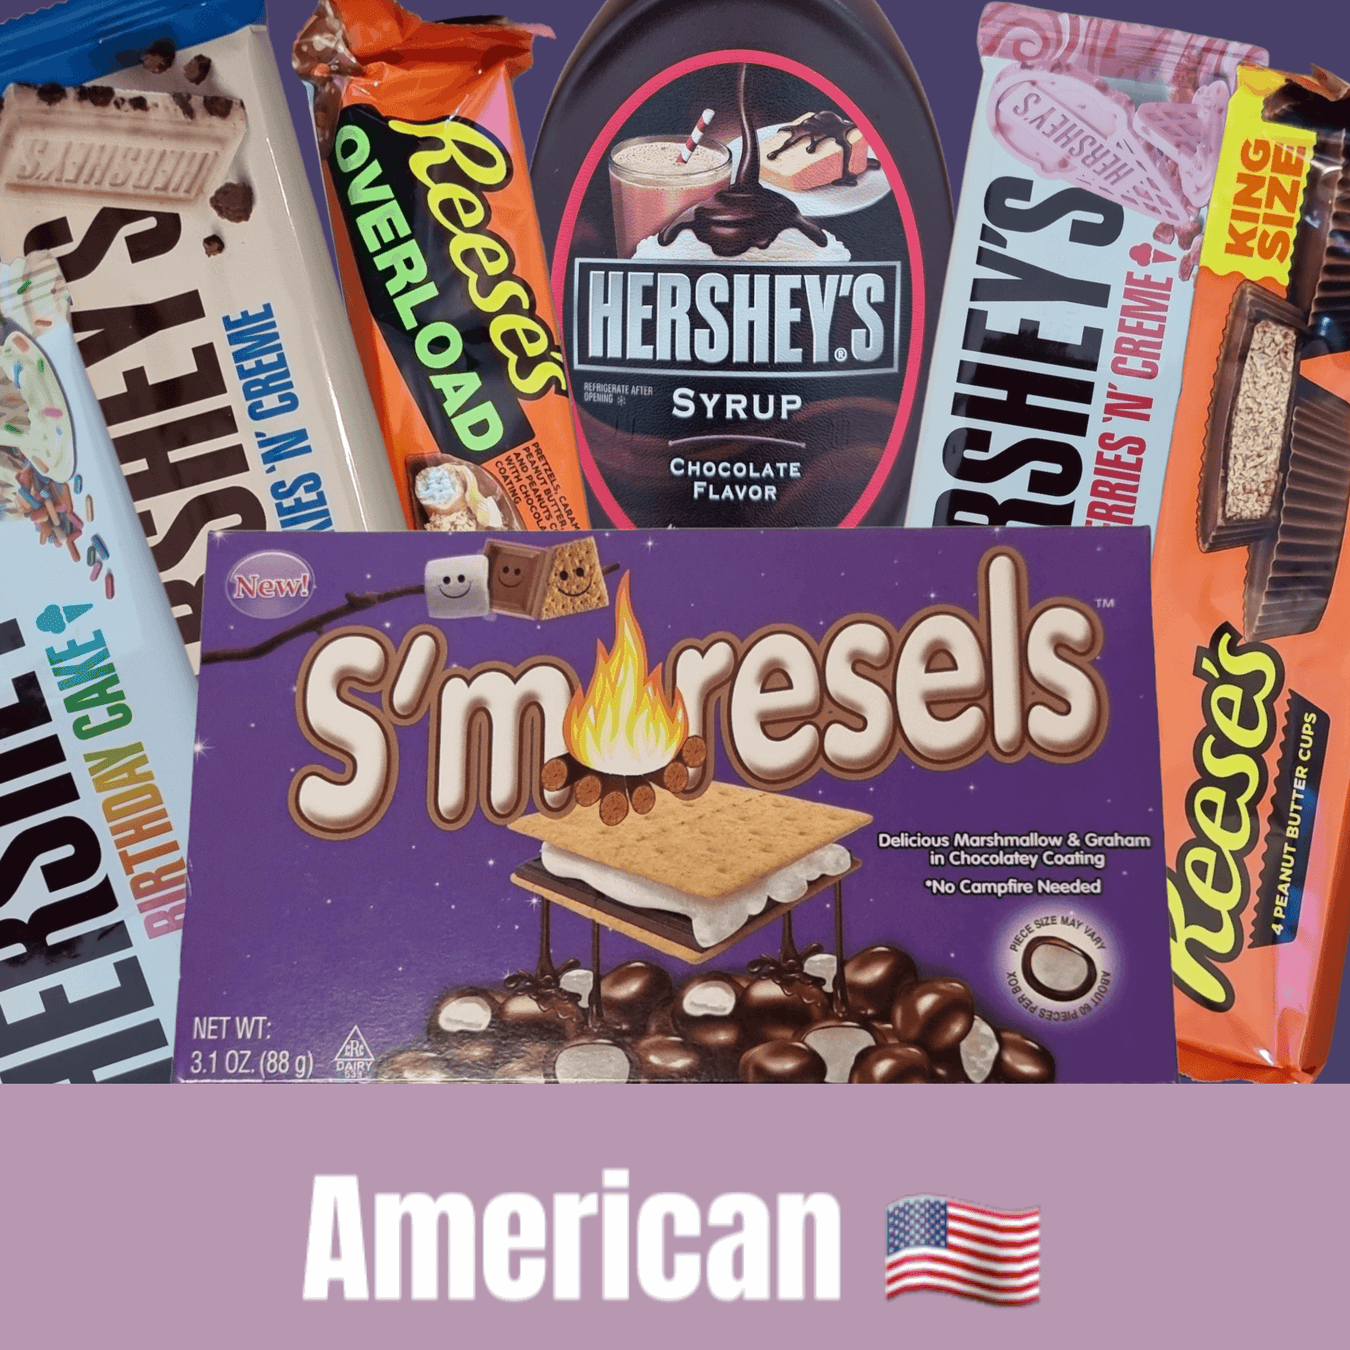 American Chocolate